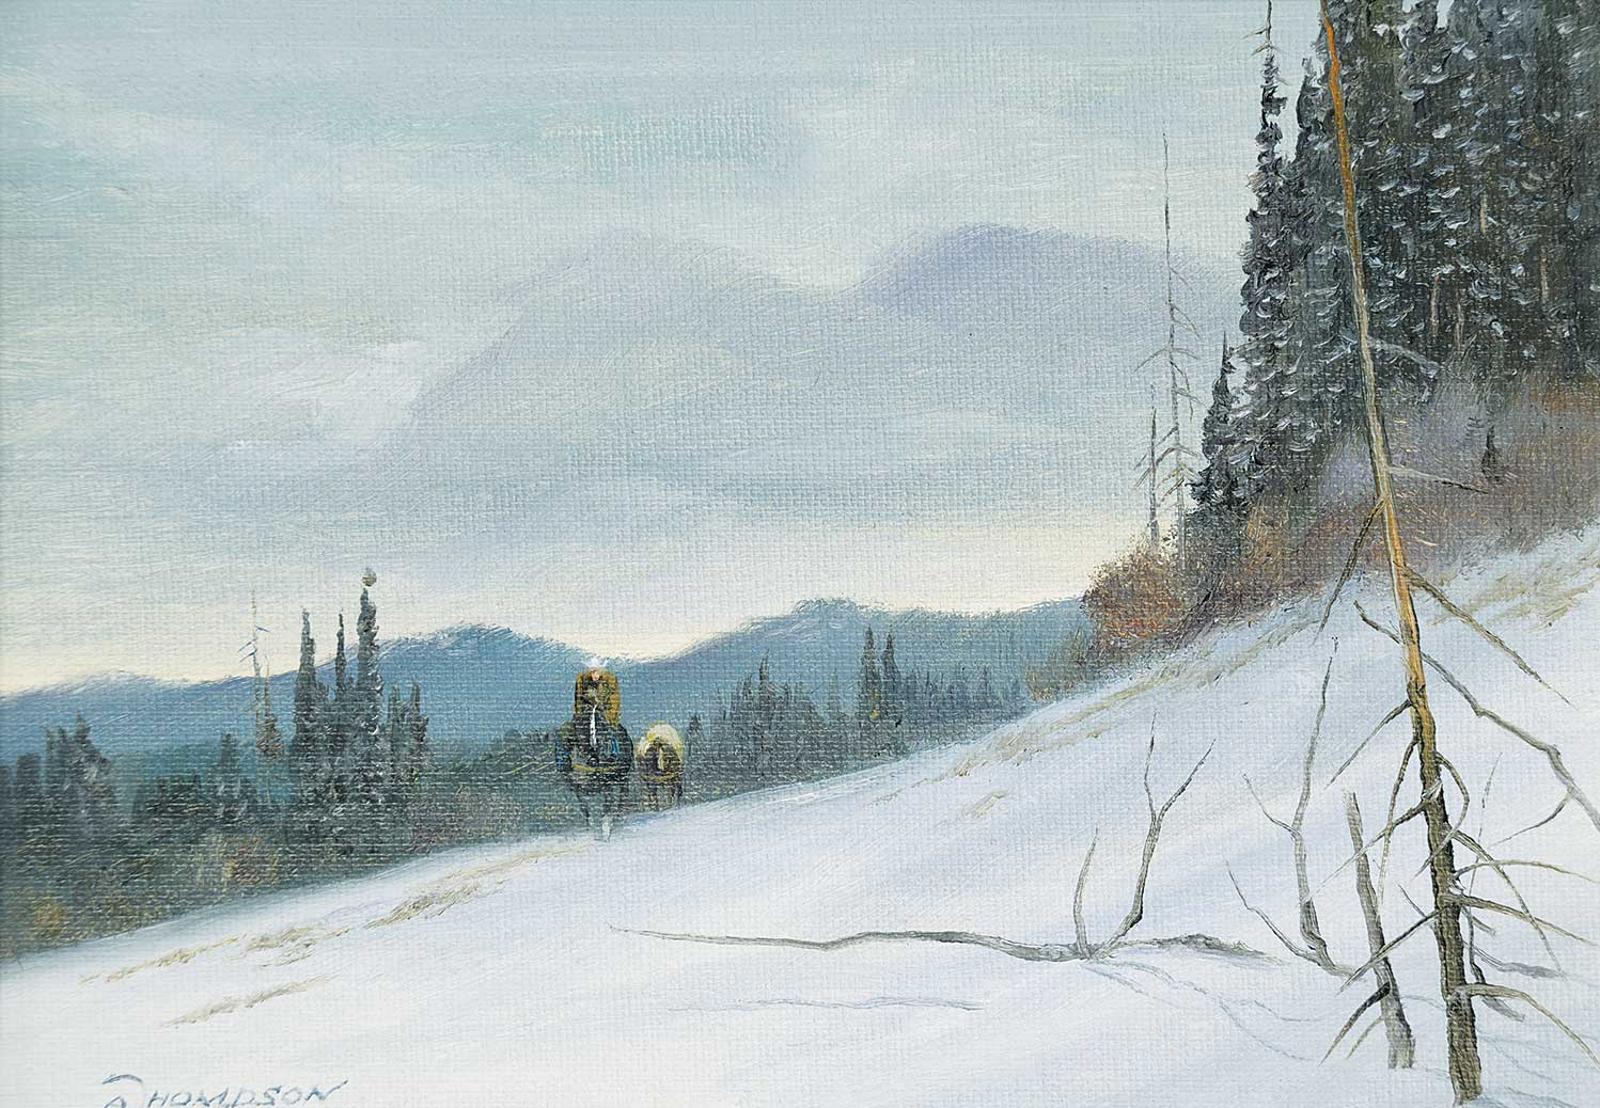 Allan Robert Thompson (1949) - Untitled - Rider in the Snow